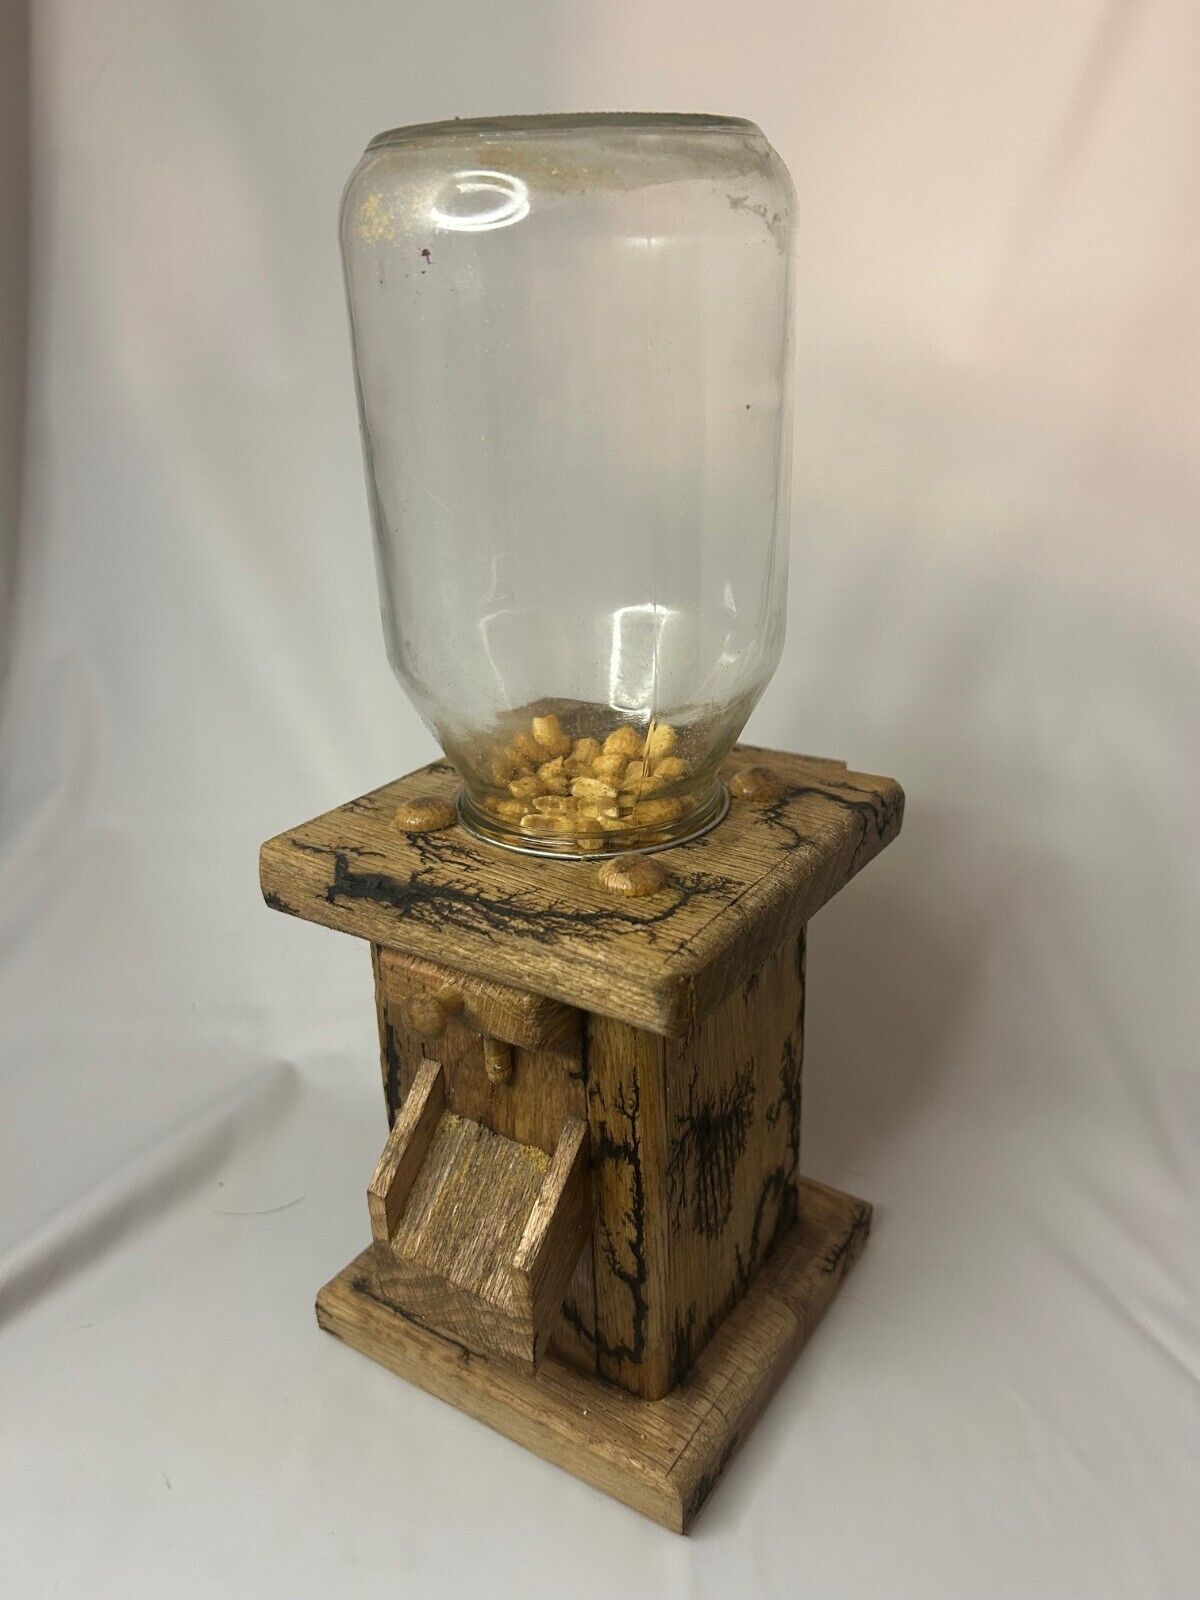 Amish Handmade Wooden Candy Dispenser With Mason Jar Solid Oak Lichtenberg burn